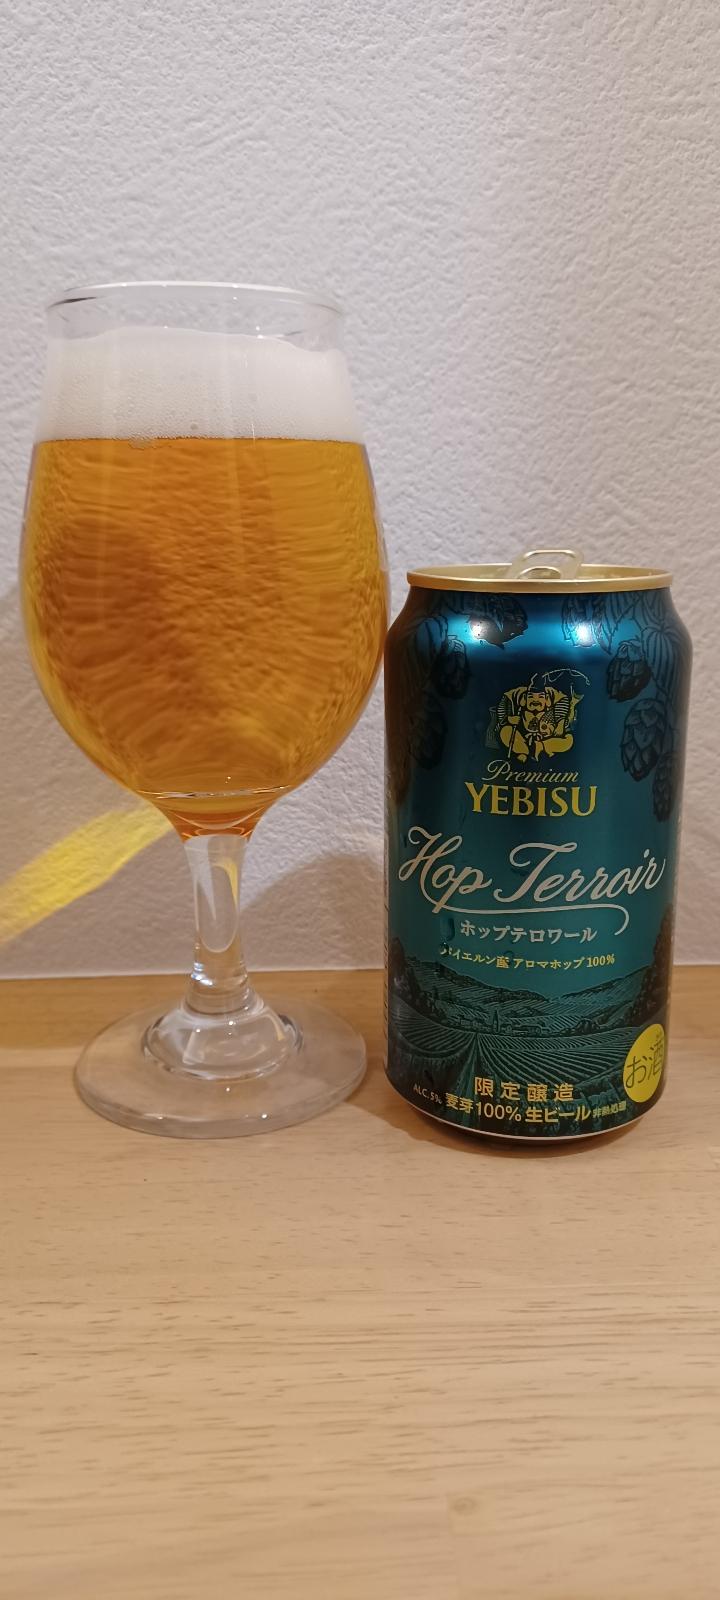 Yebisu Premium Hop Terroir - Hallertau